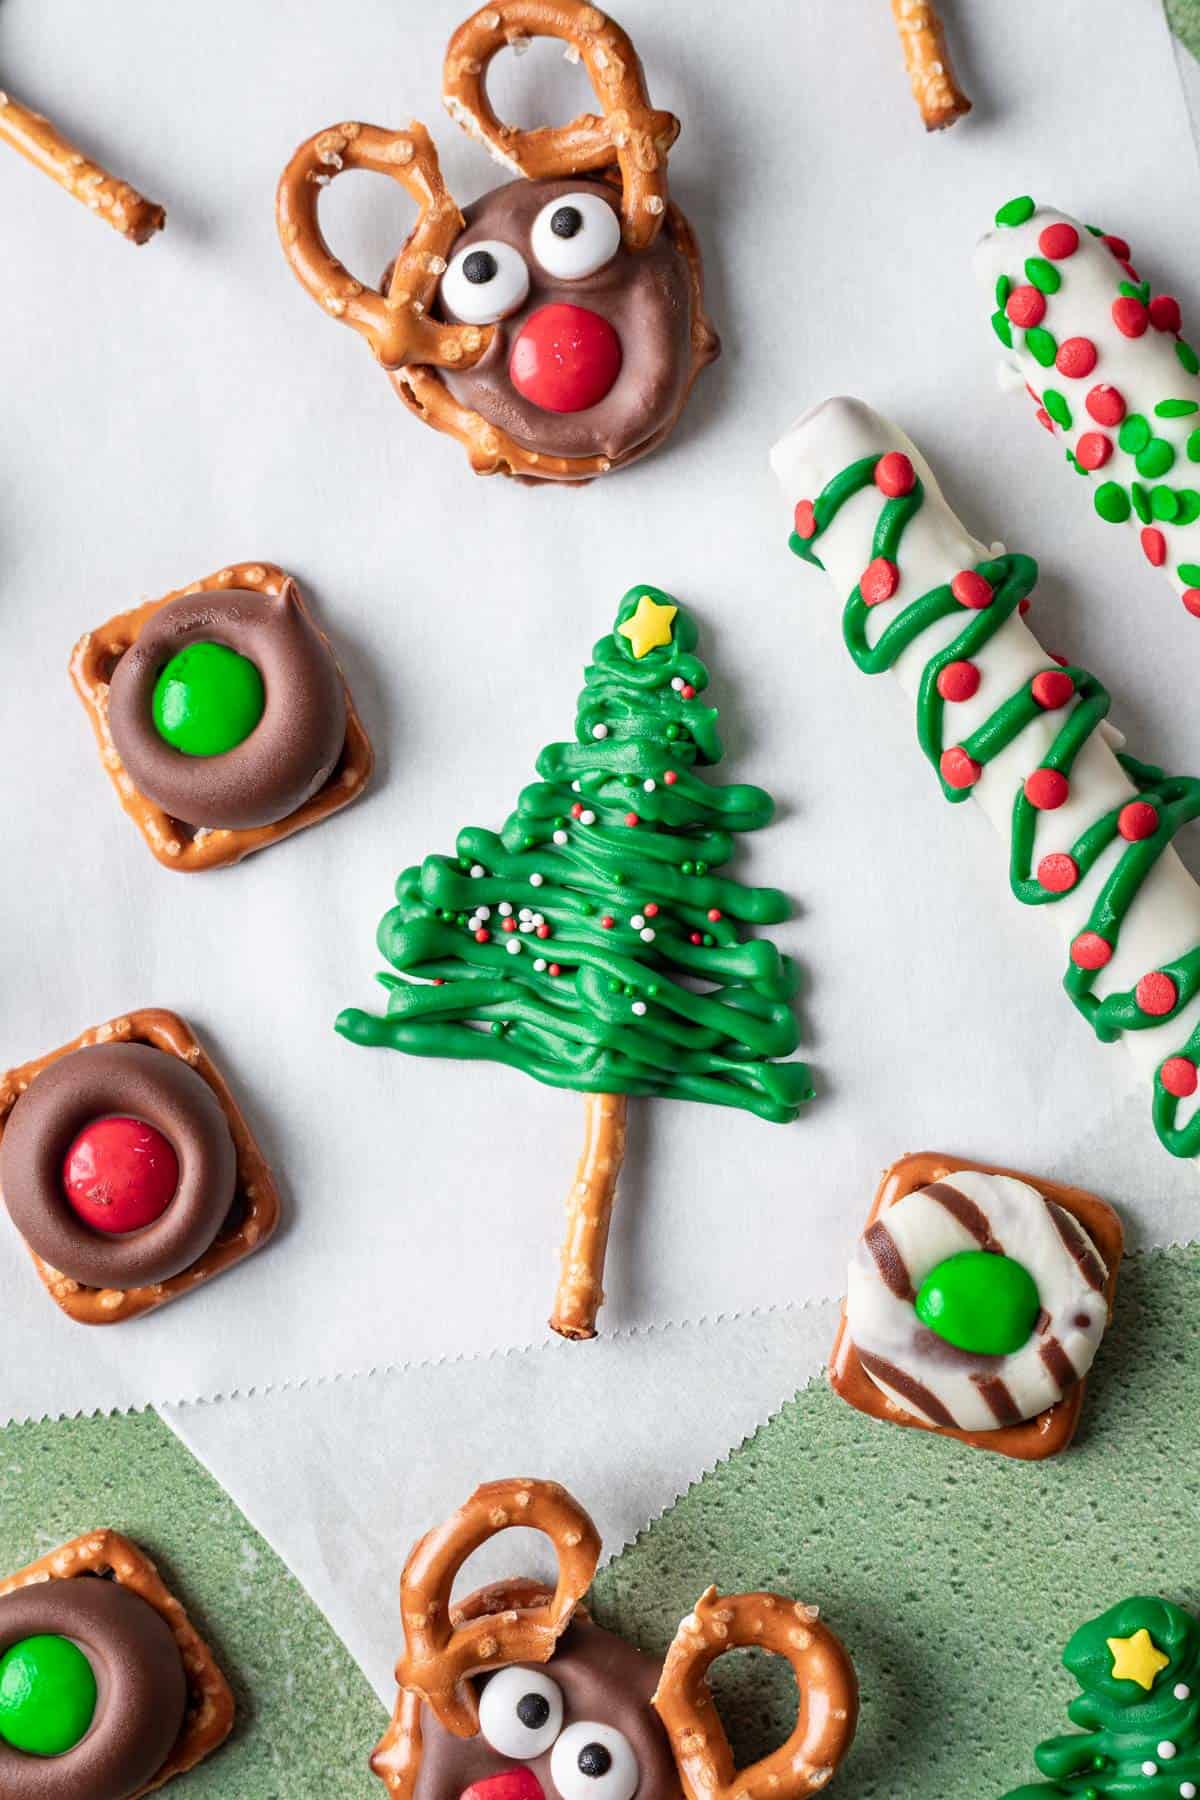 Christmas tree pretzels arranged with reindeer pretzels, chocolate covered pretzel rods, and other christmas pretzels.